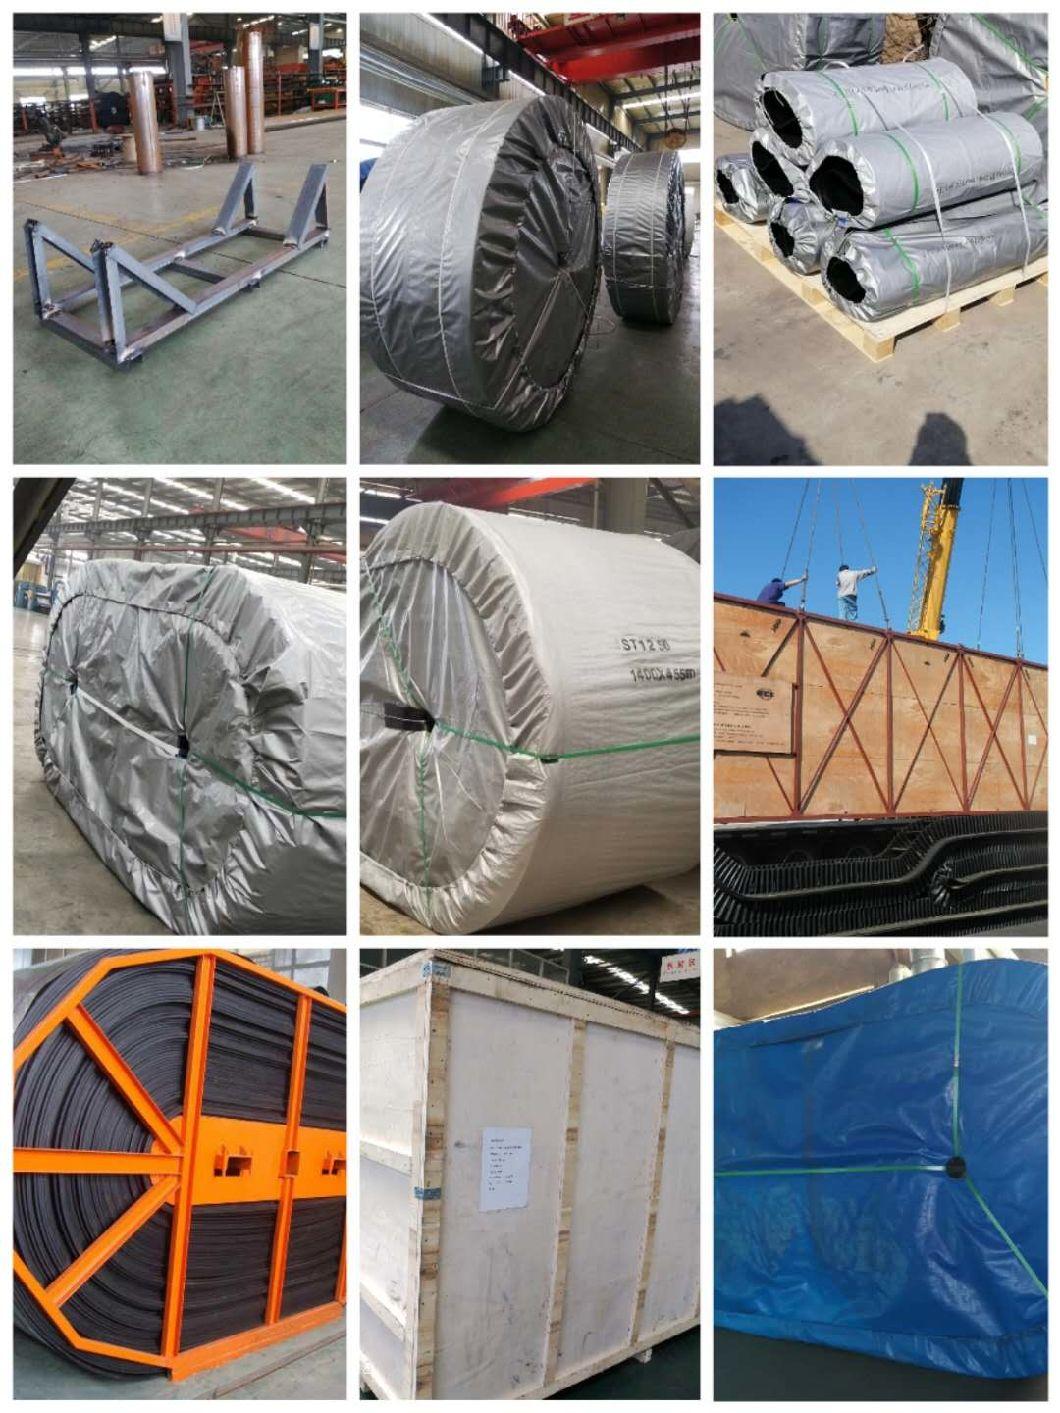 Standard JIS-K6324 Anti-Static High Quality Steel Cord Rubber Conveyor Belt From China